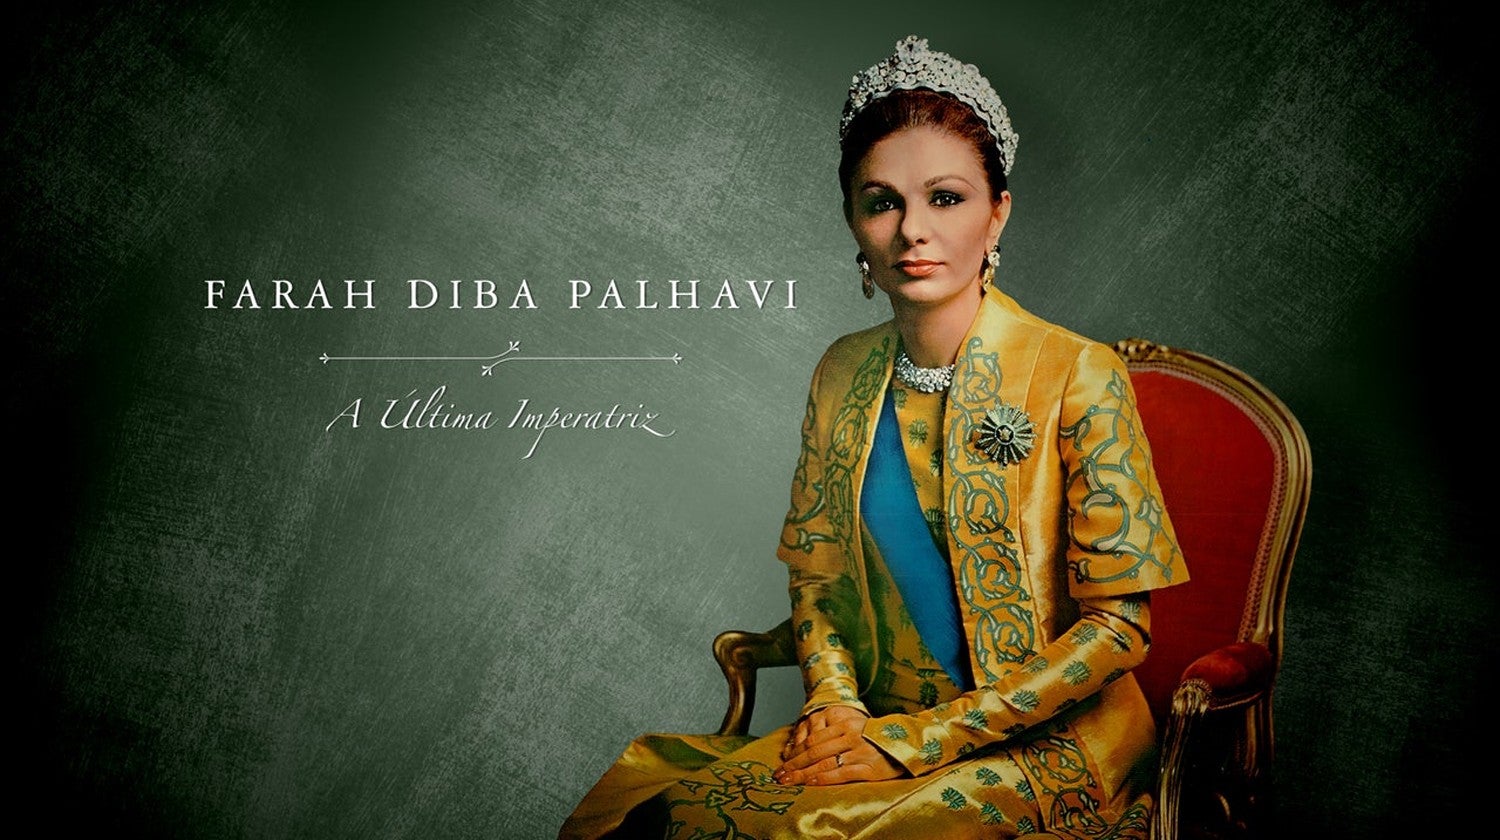 Farah Diba Palhavi, A ltima Imperatriz